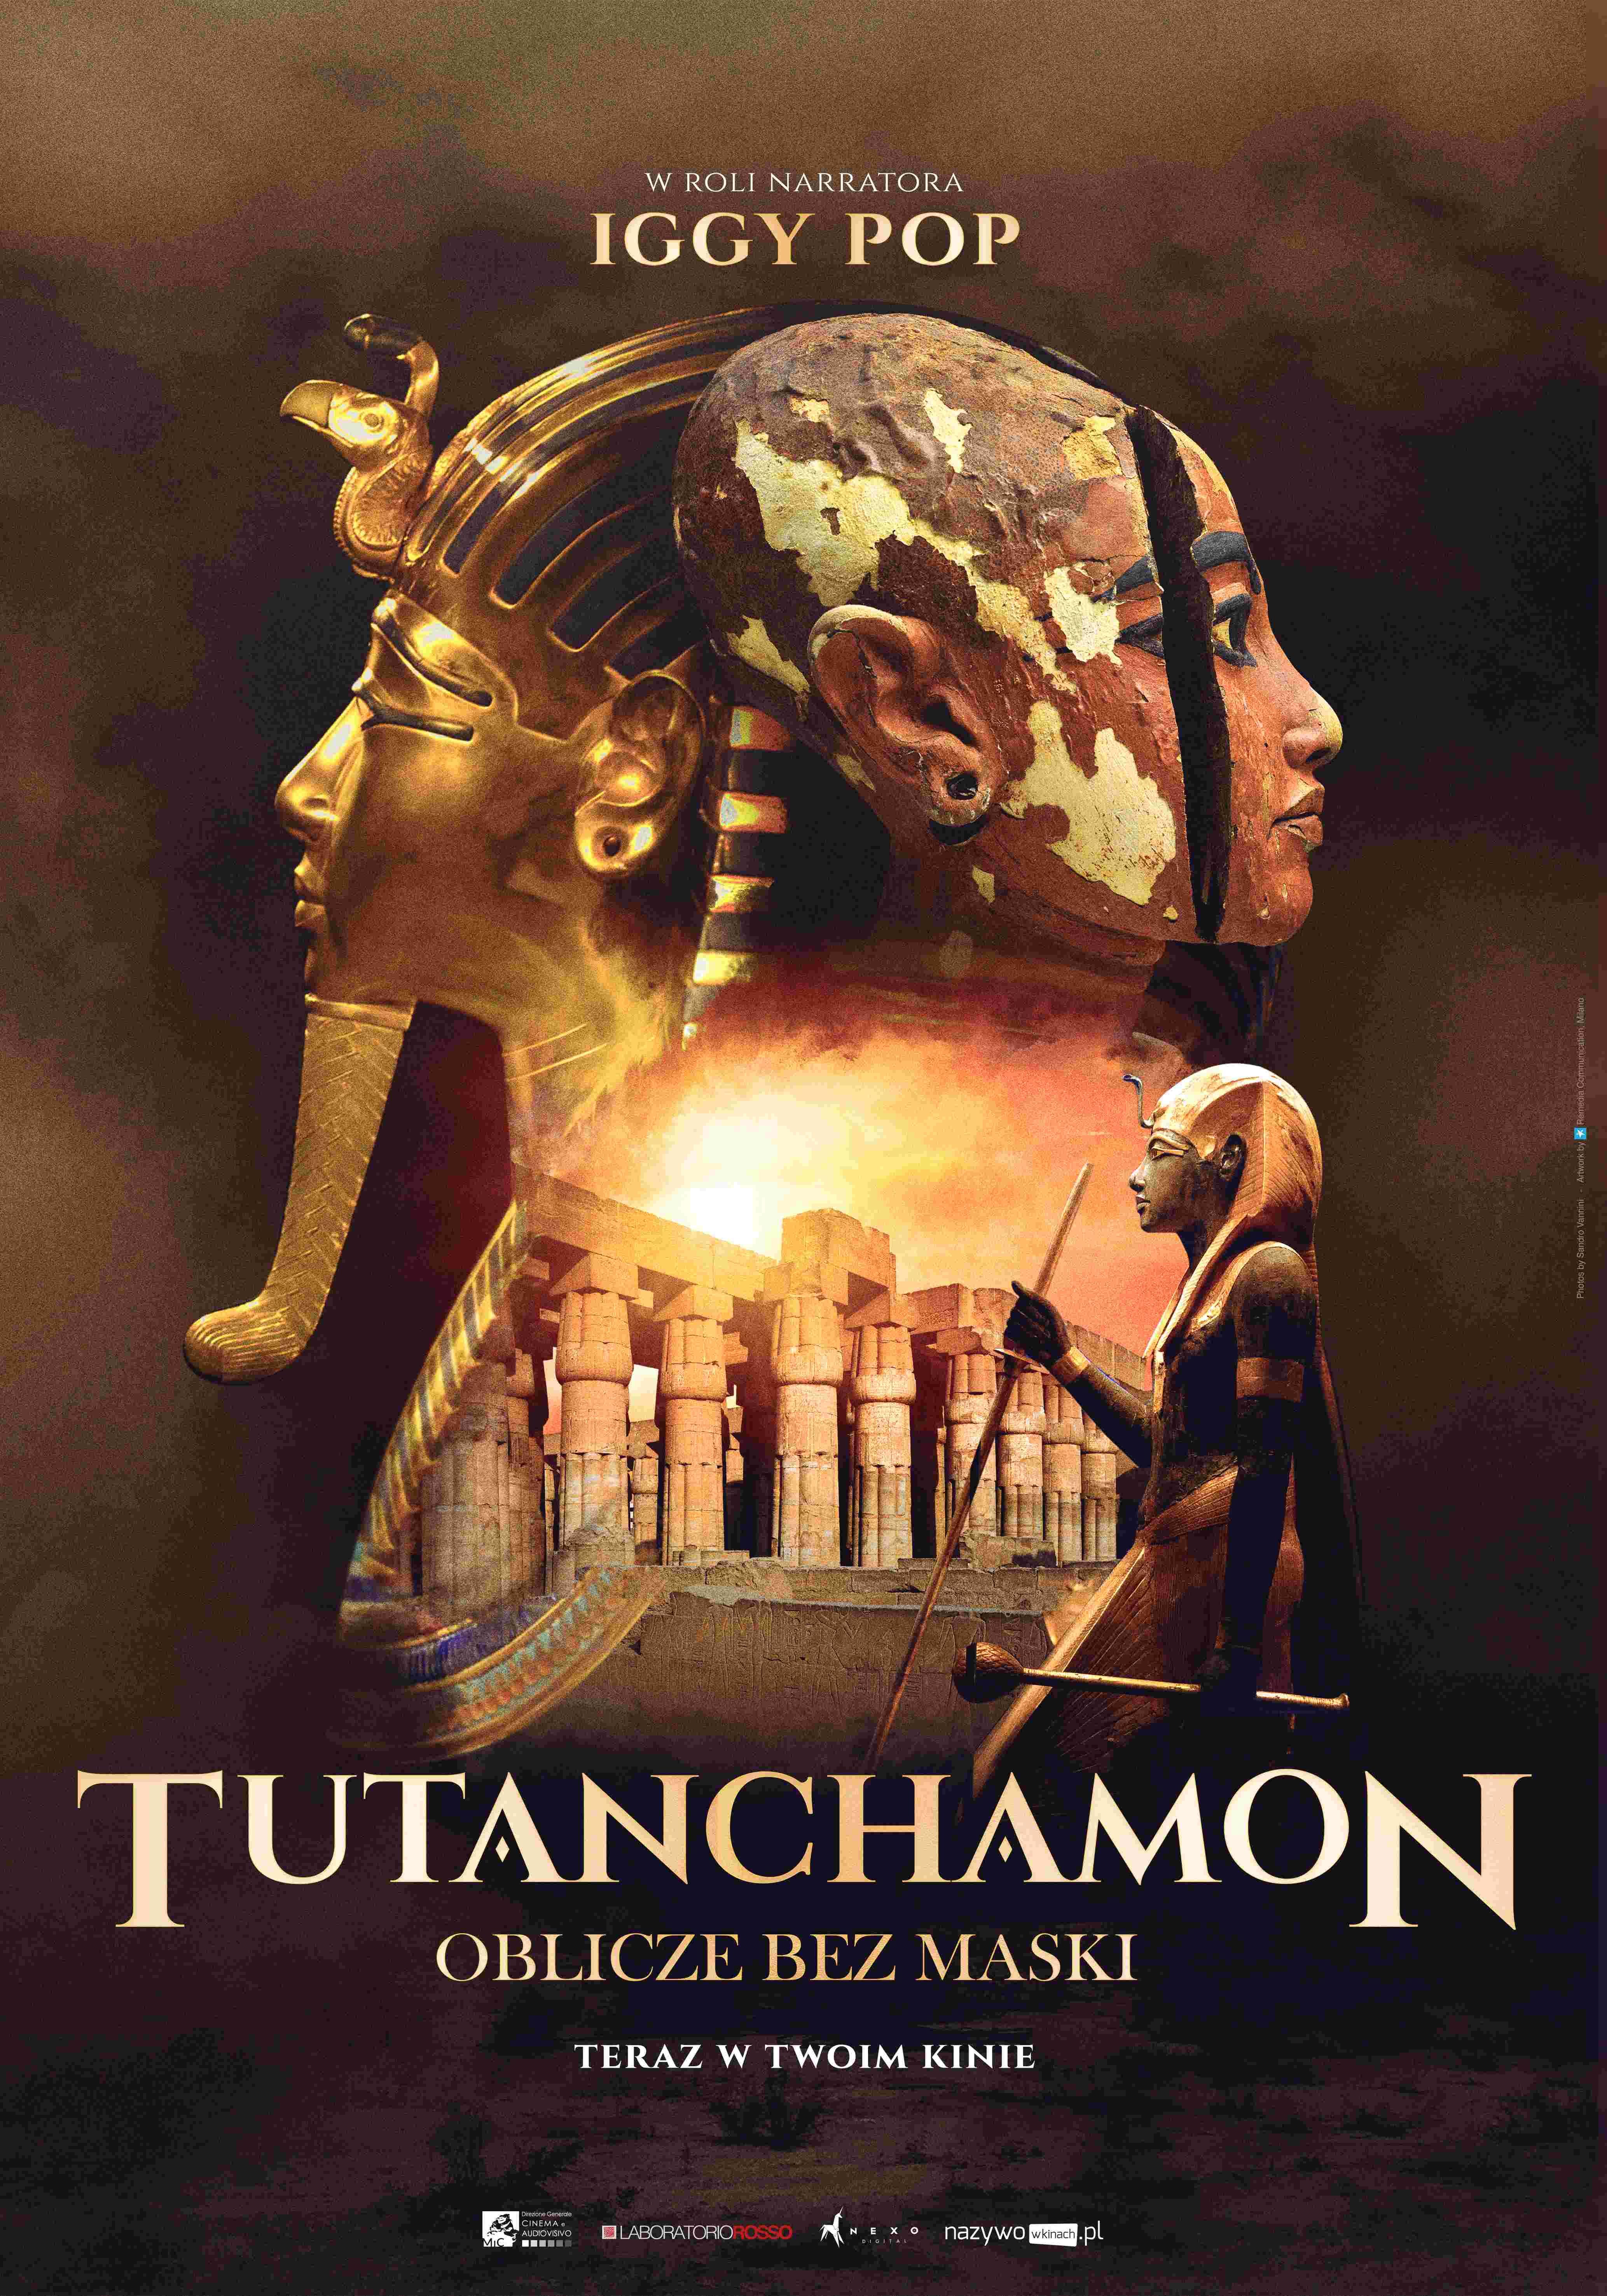 Tutanchamon: oblicze bez maski